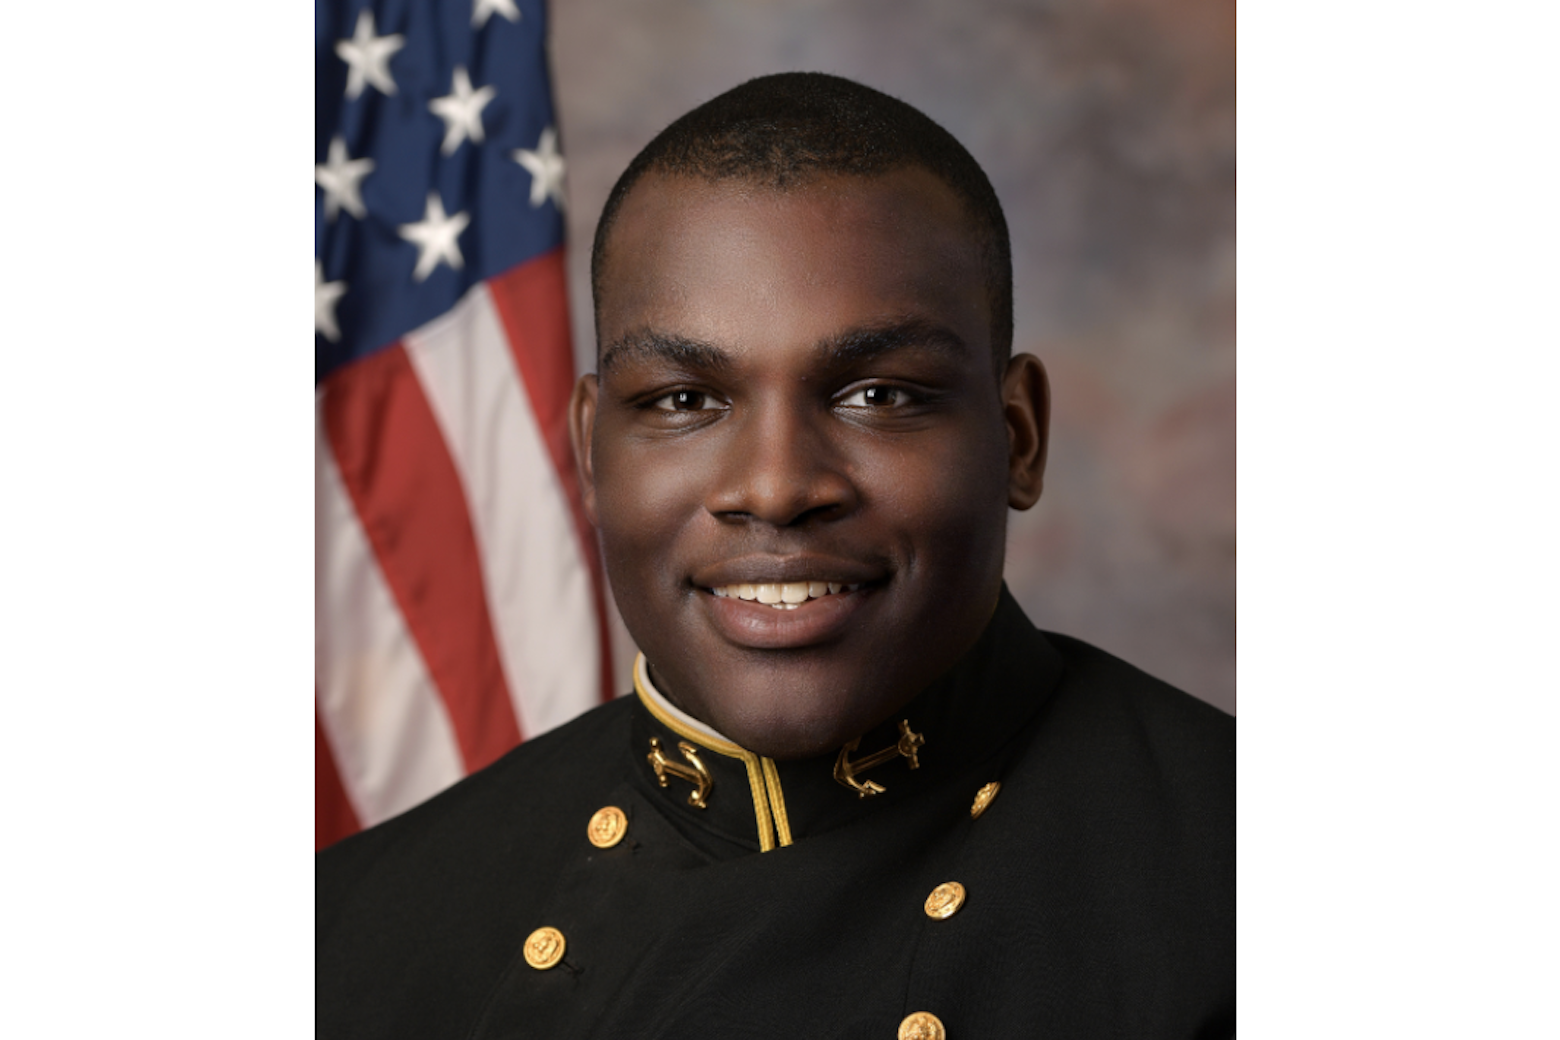 We are heartbroken: Naval Academy identifies midshipman who died